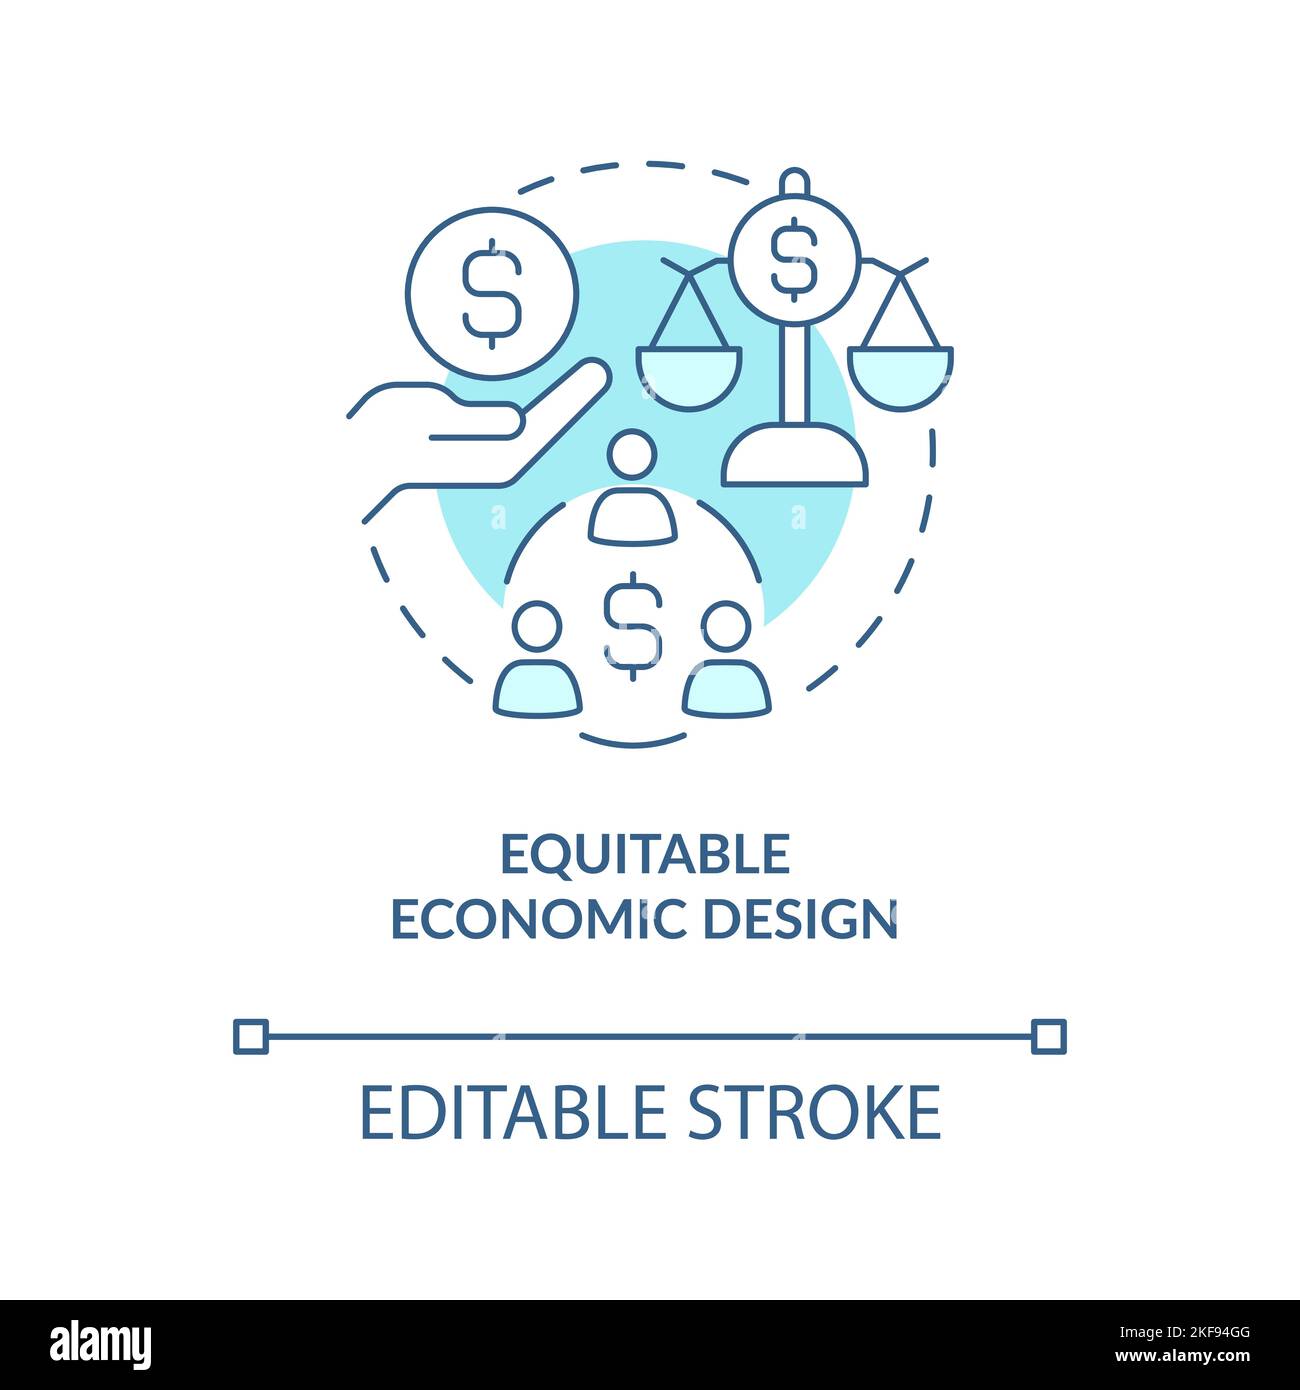 Equitable economic design turquoise concept icon Stock Vector